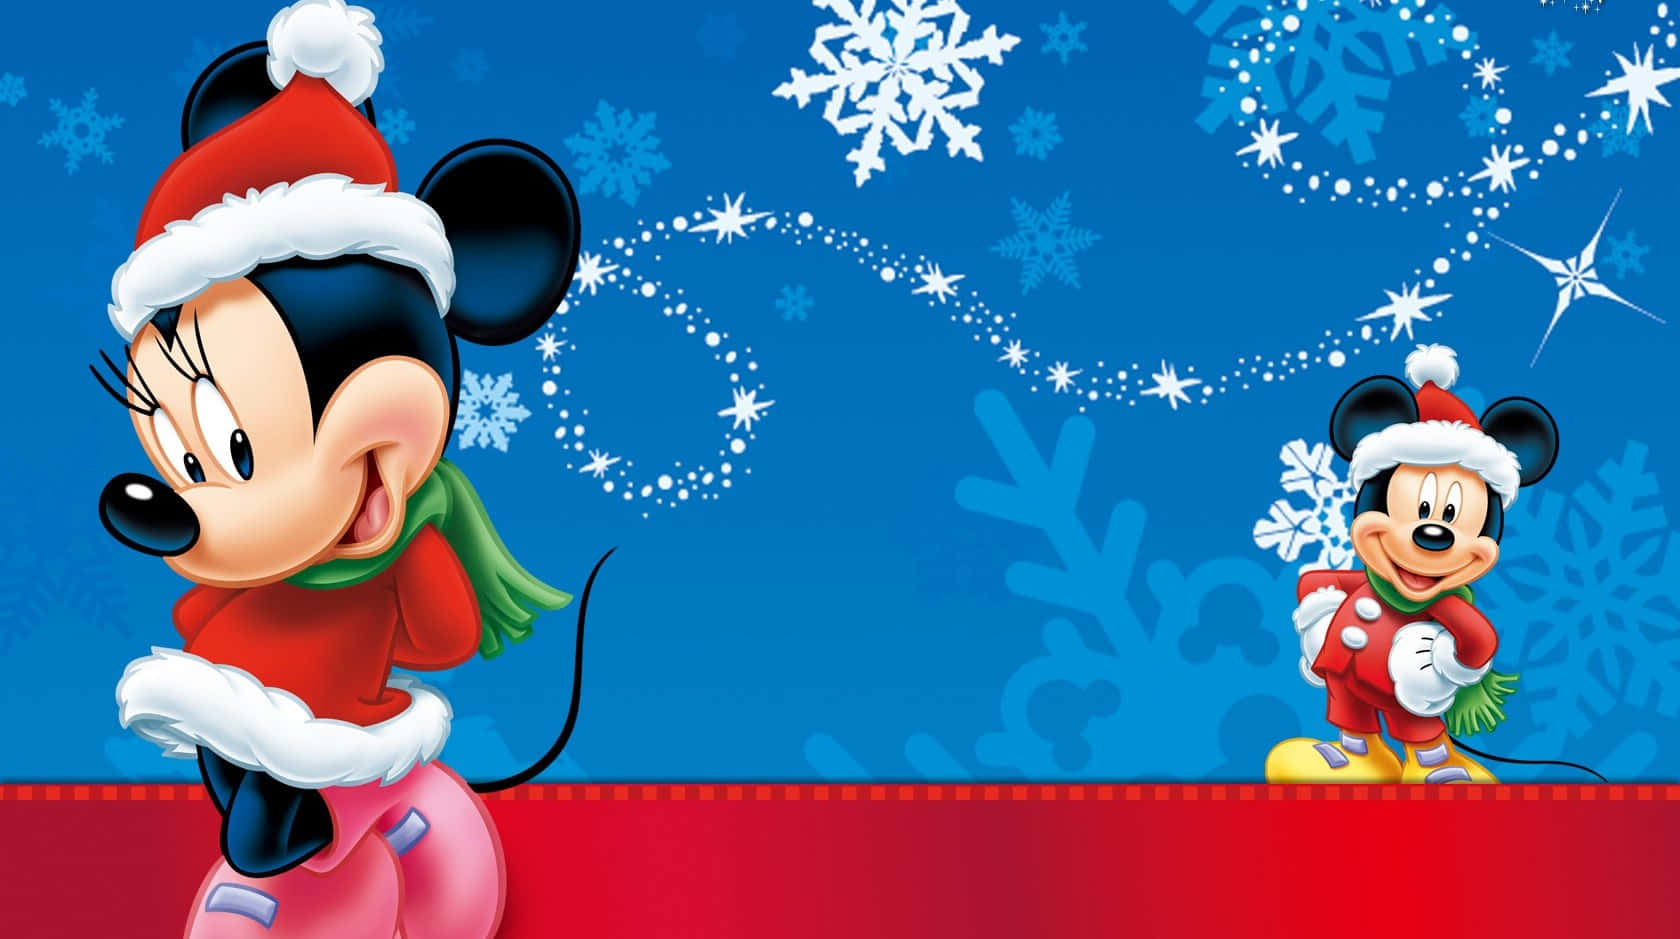 Cute Disney Christmas Animated Couple Wallpaper